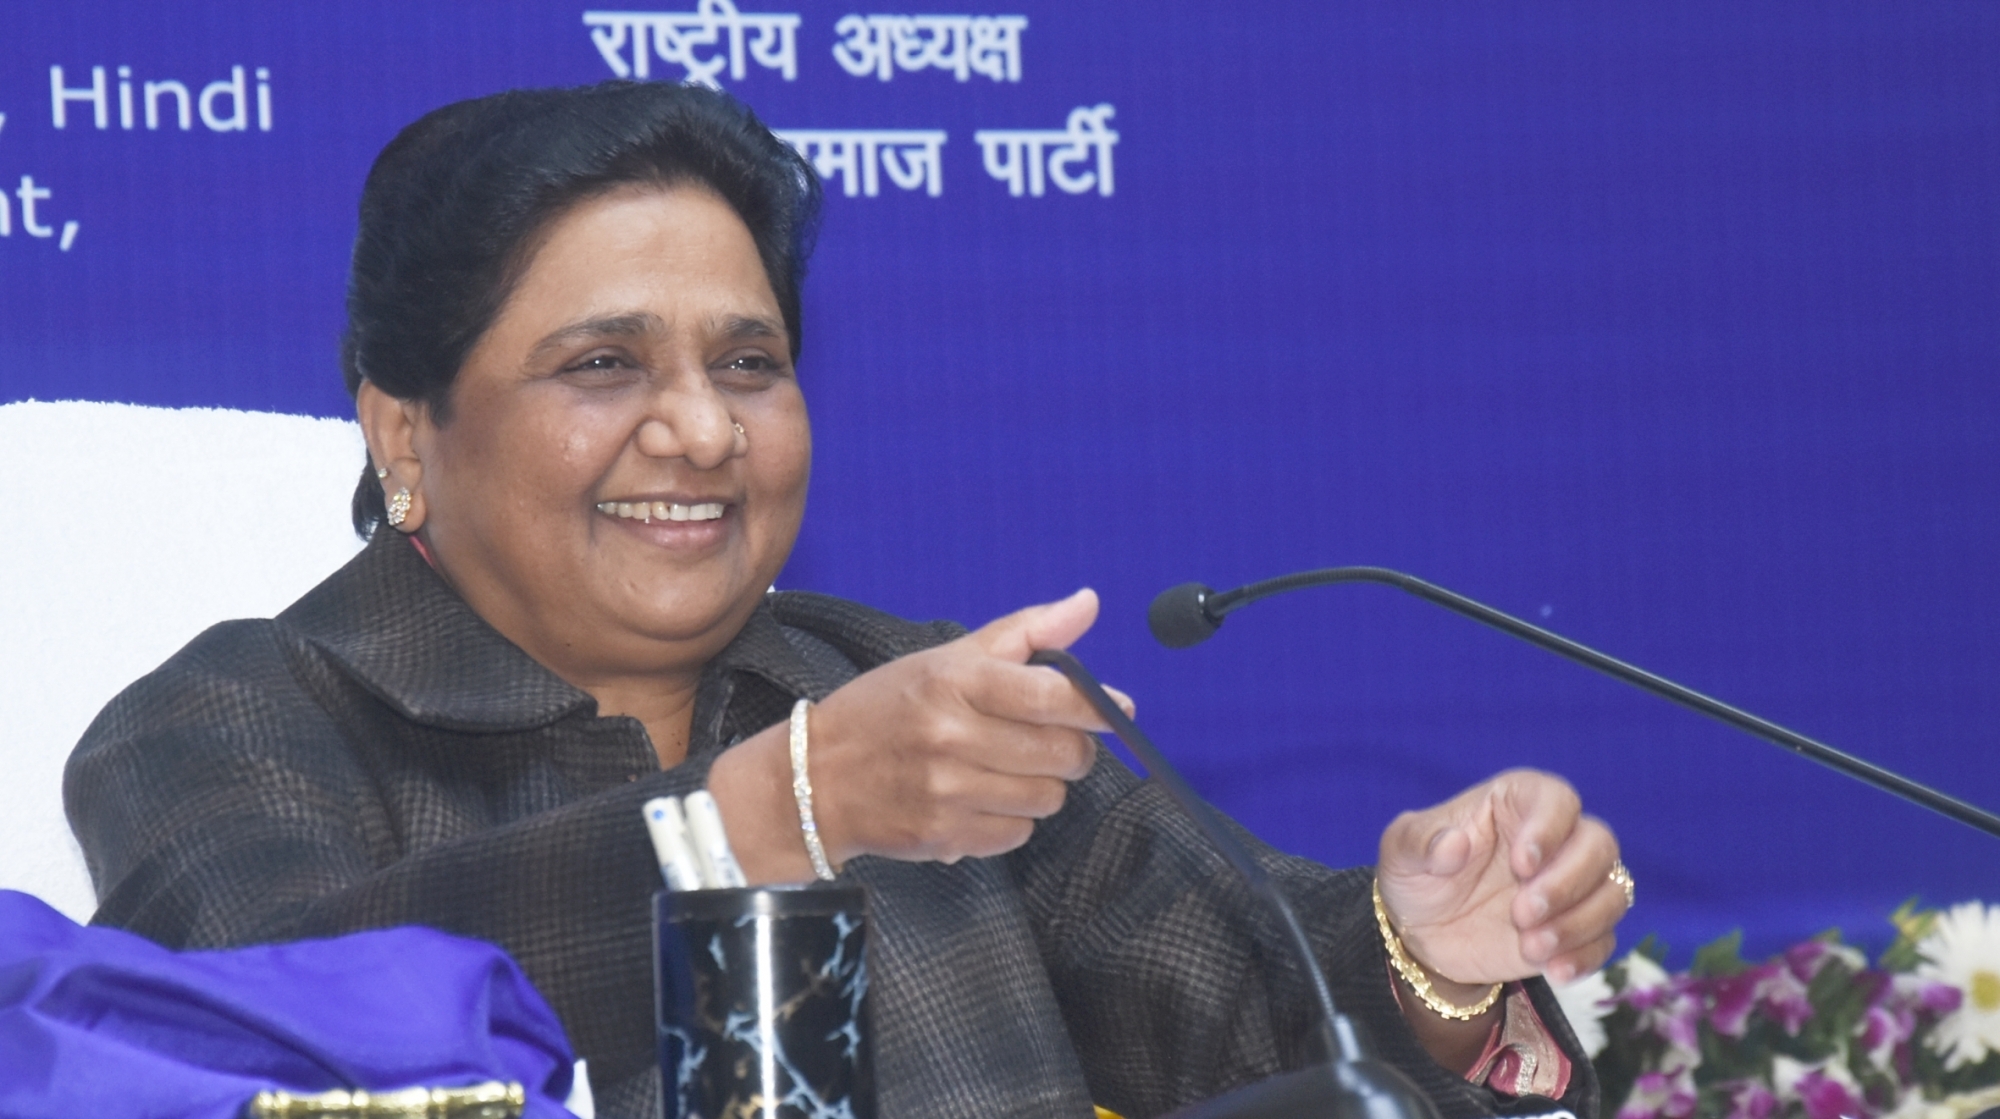 BSP supremo Mayawati gets active on social media